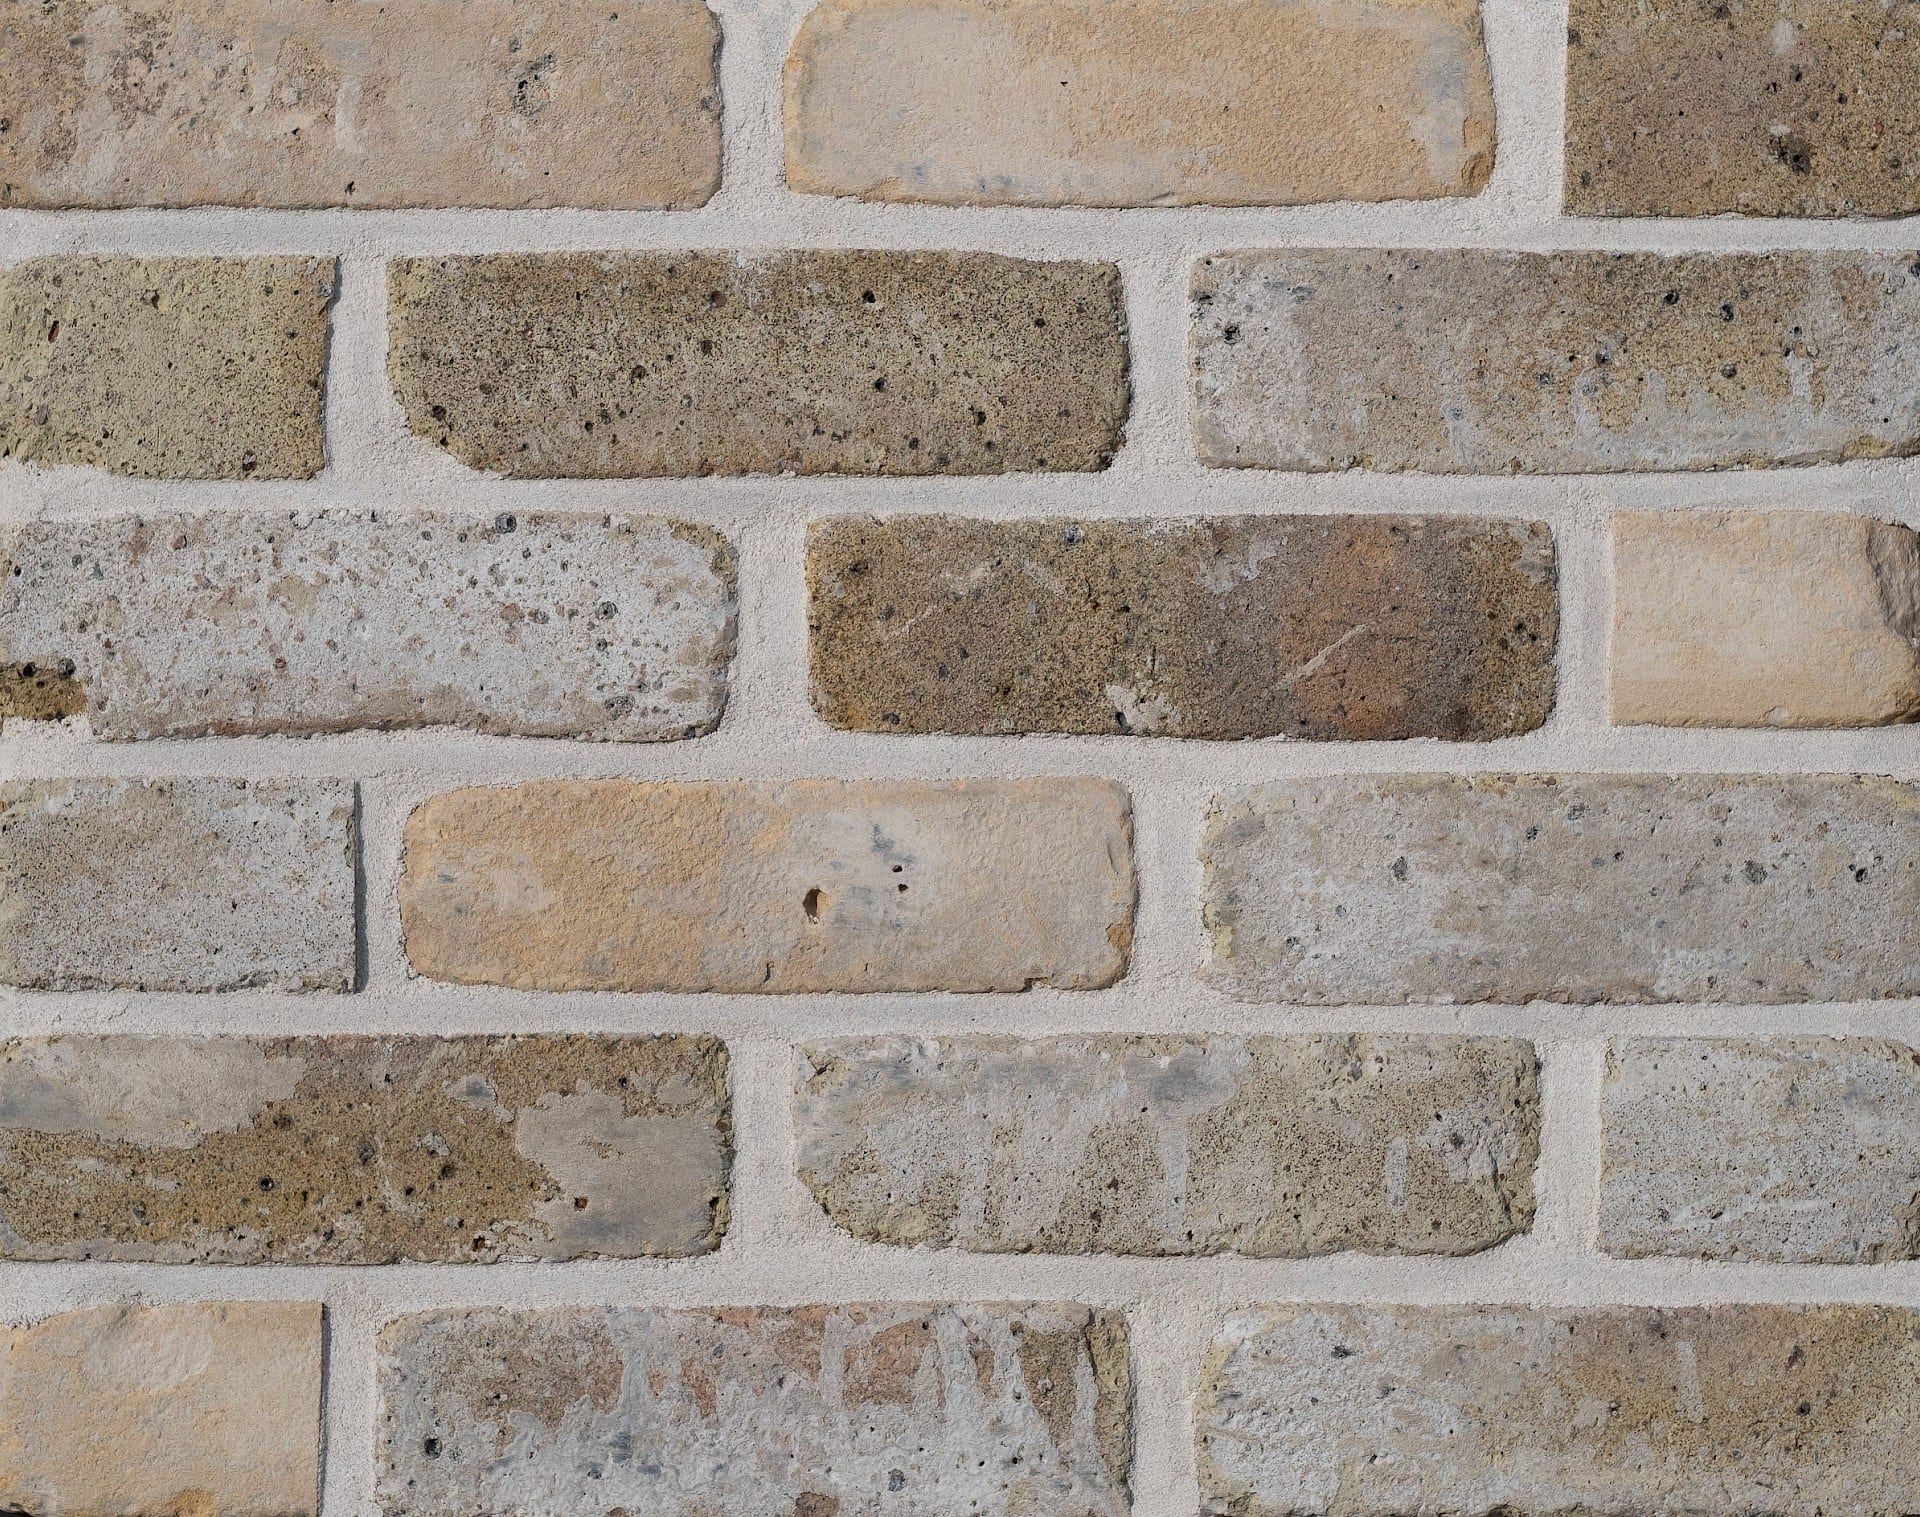 A photo of the Camtech Rustica Dartford Yellow Rustica brick in use.